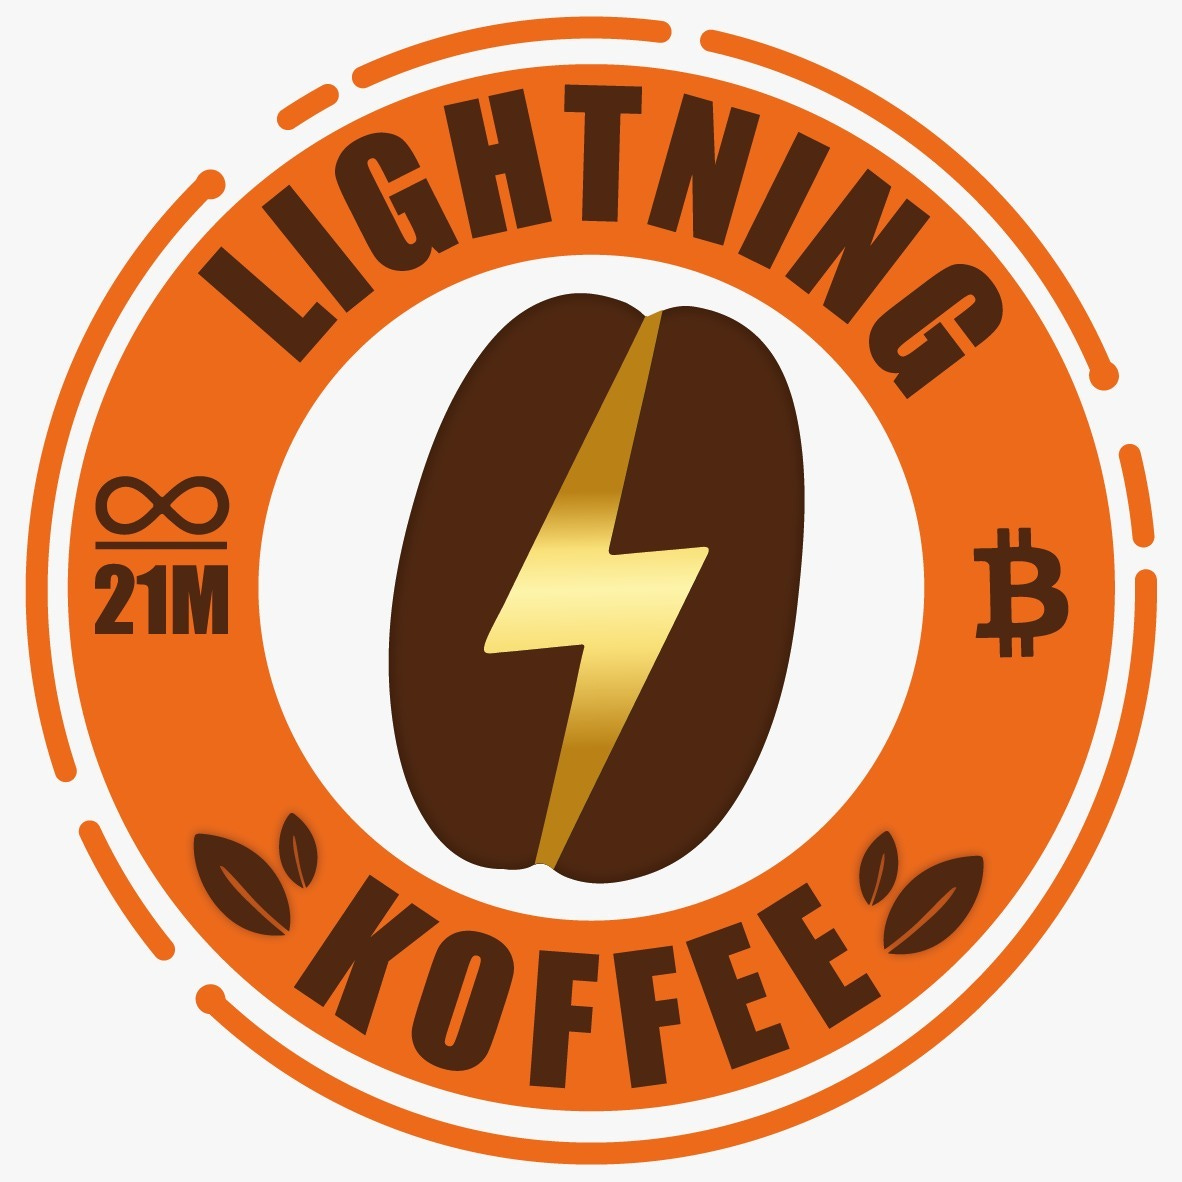 Lightningkoffee | Twitter, Instagram | Linktree